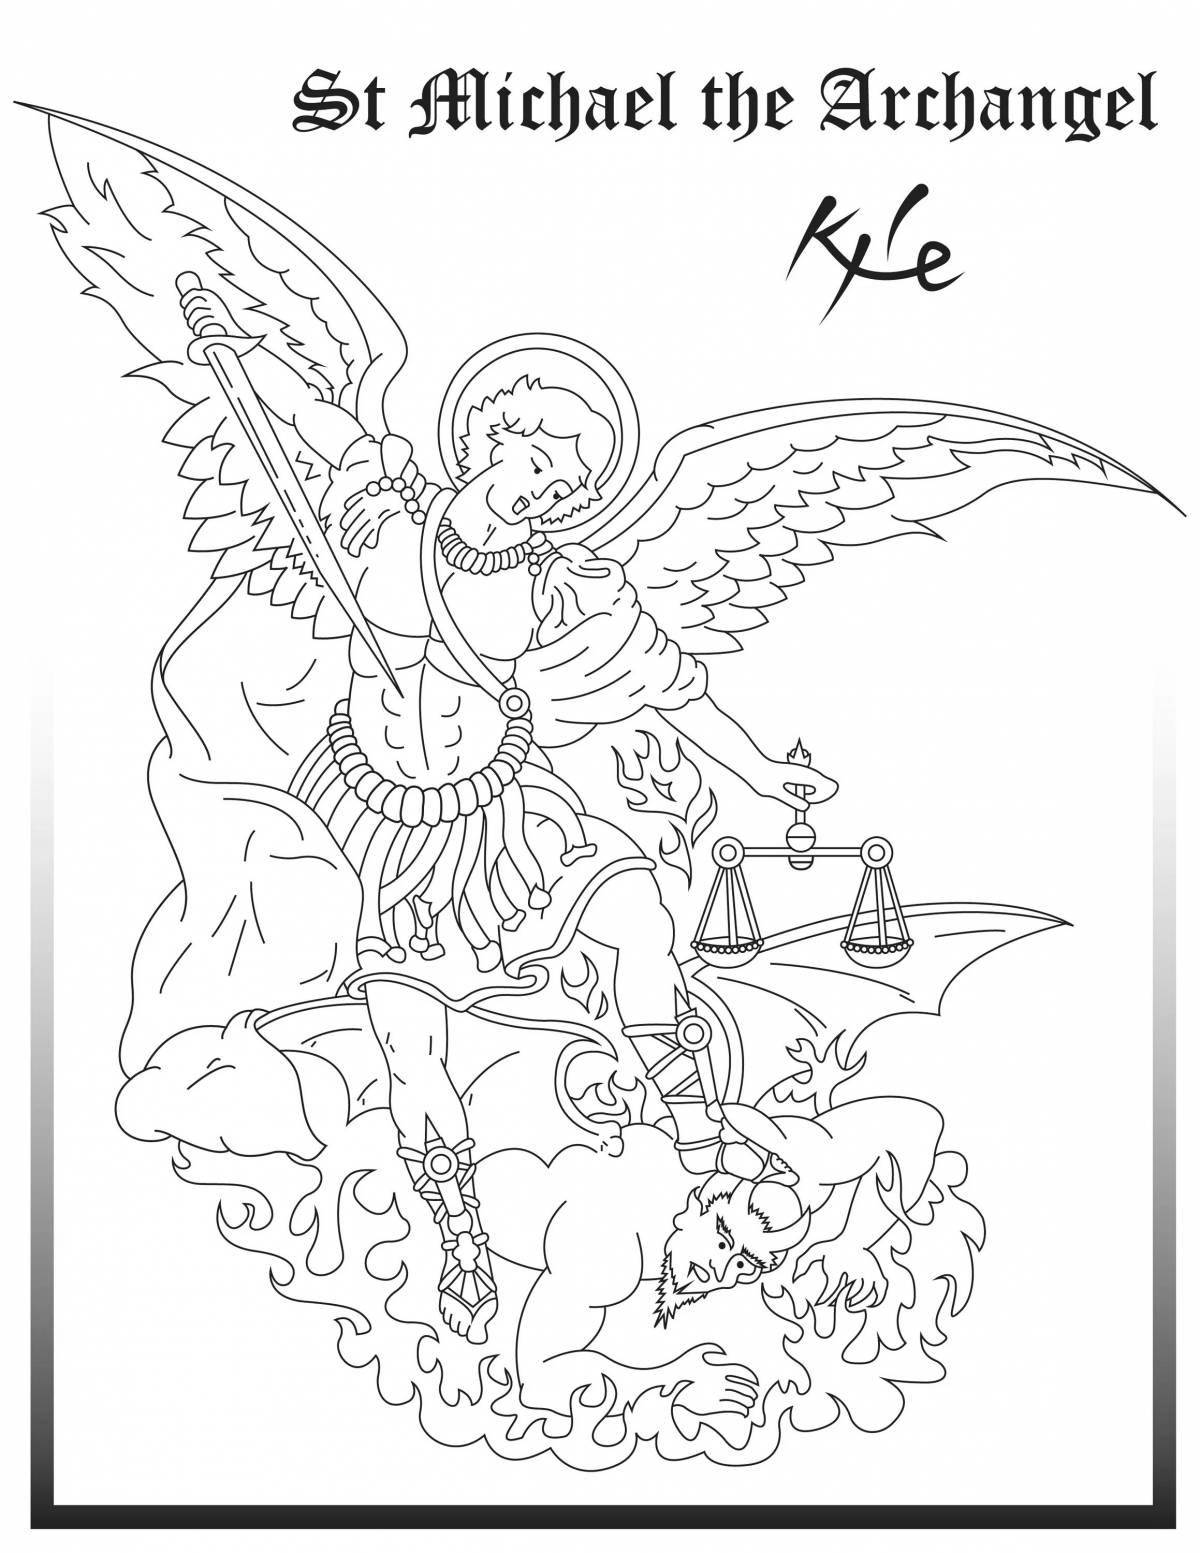 Coloring book royal archangel michael